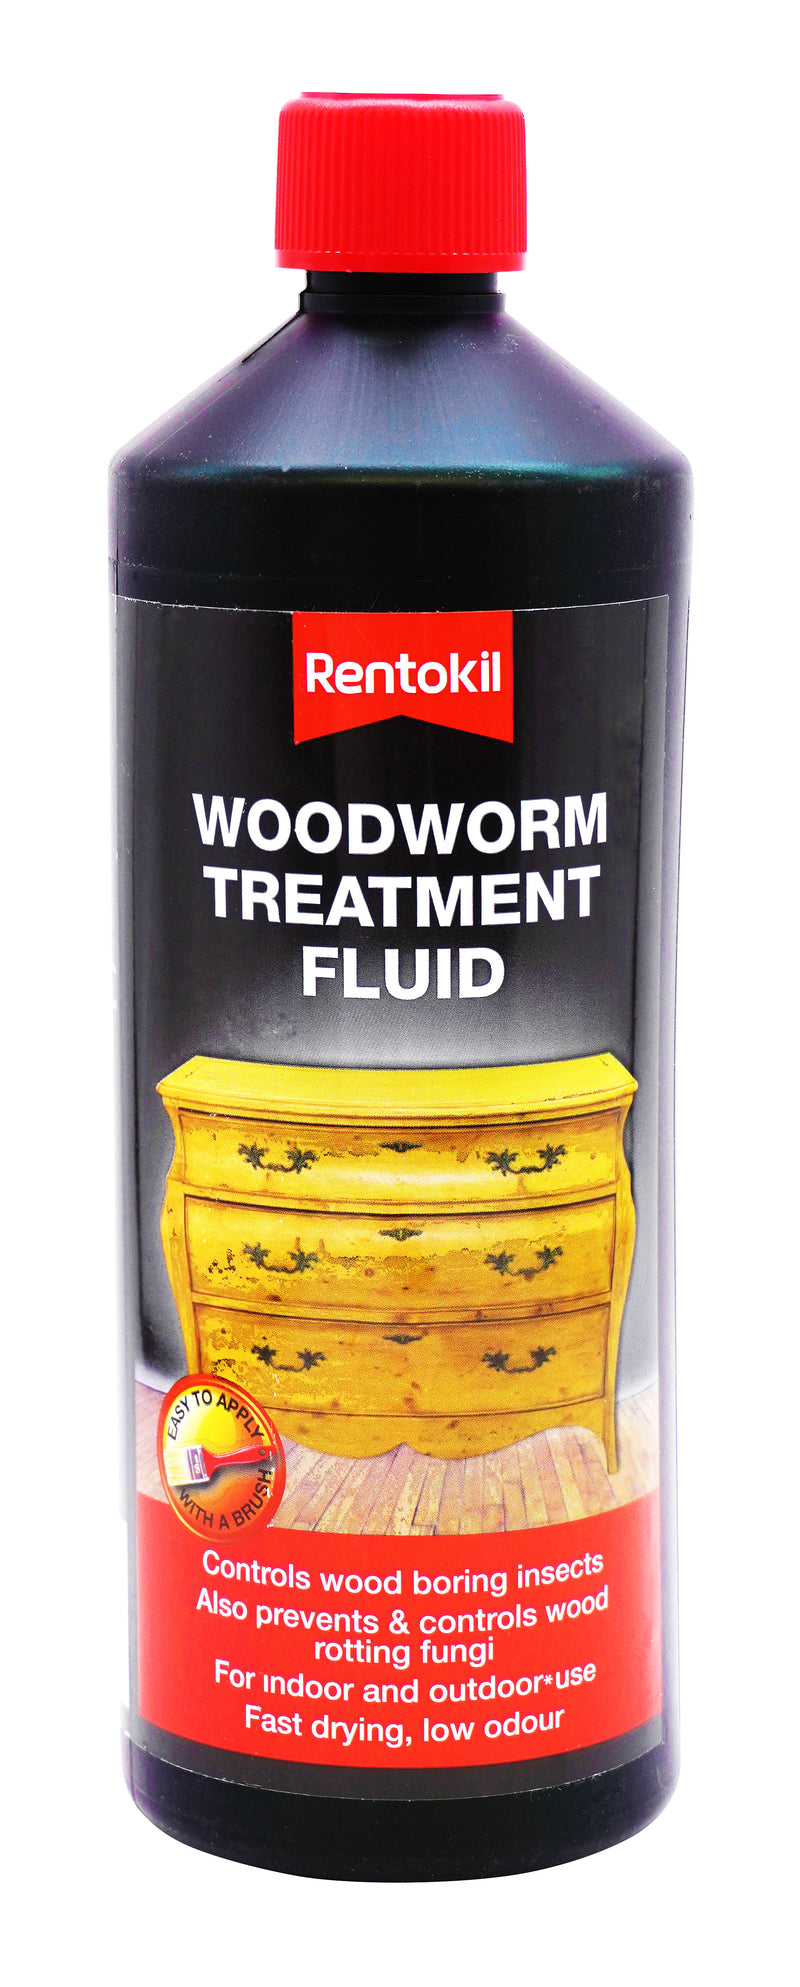 Rentokil Woodworm Treatment Fluid - 1 Litre